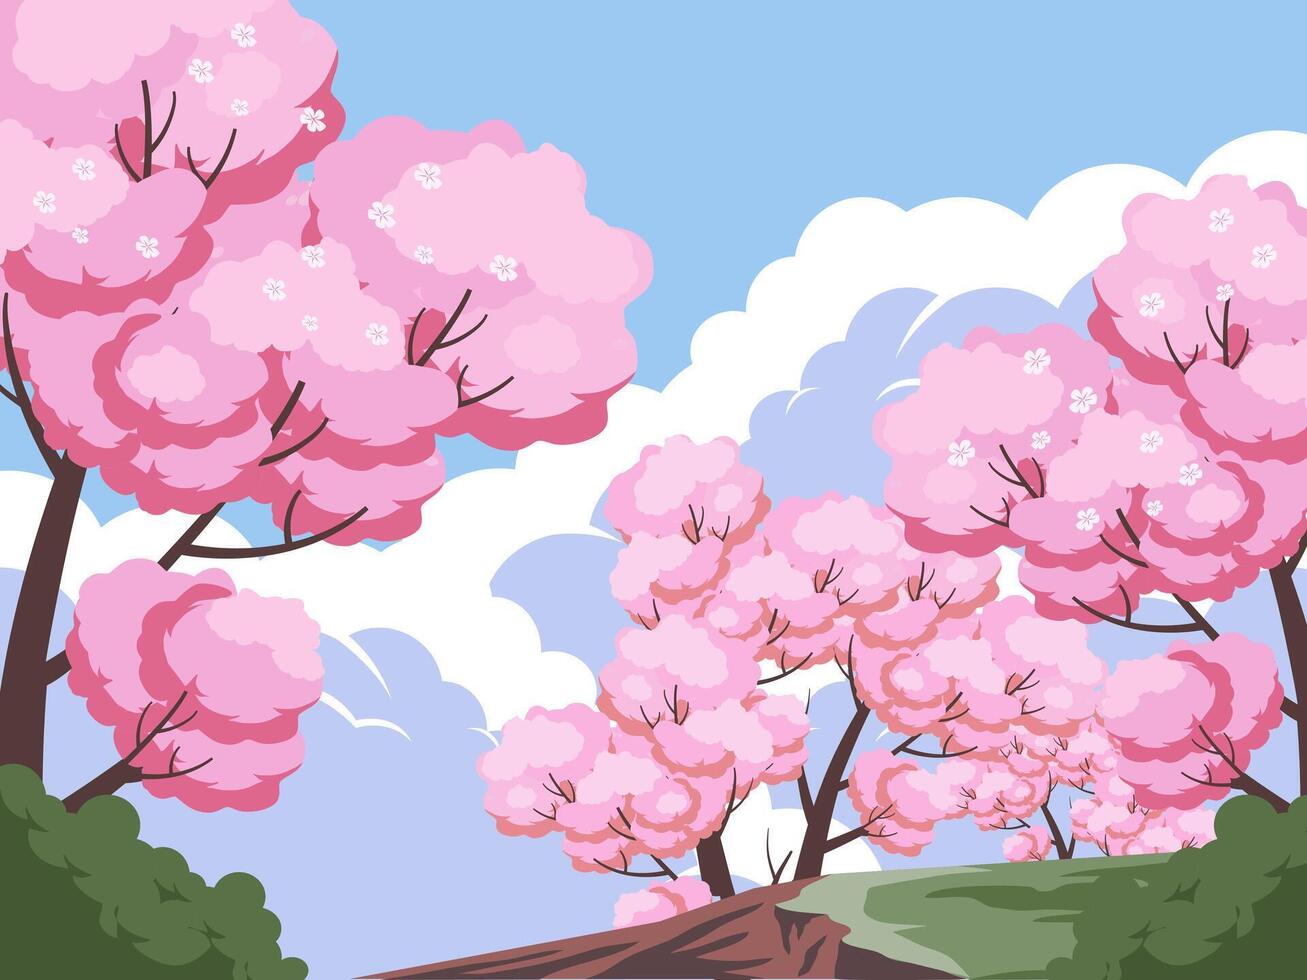 Cherry blossom landscape vector